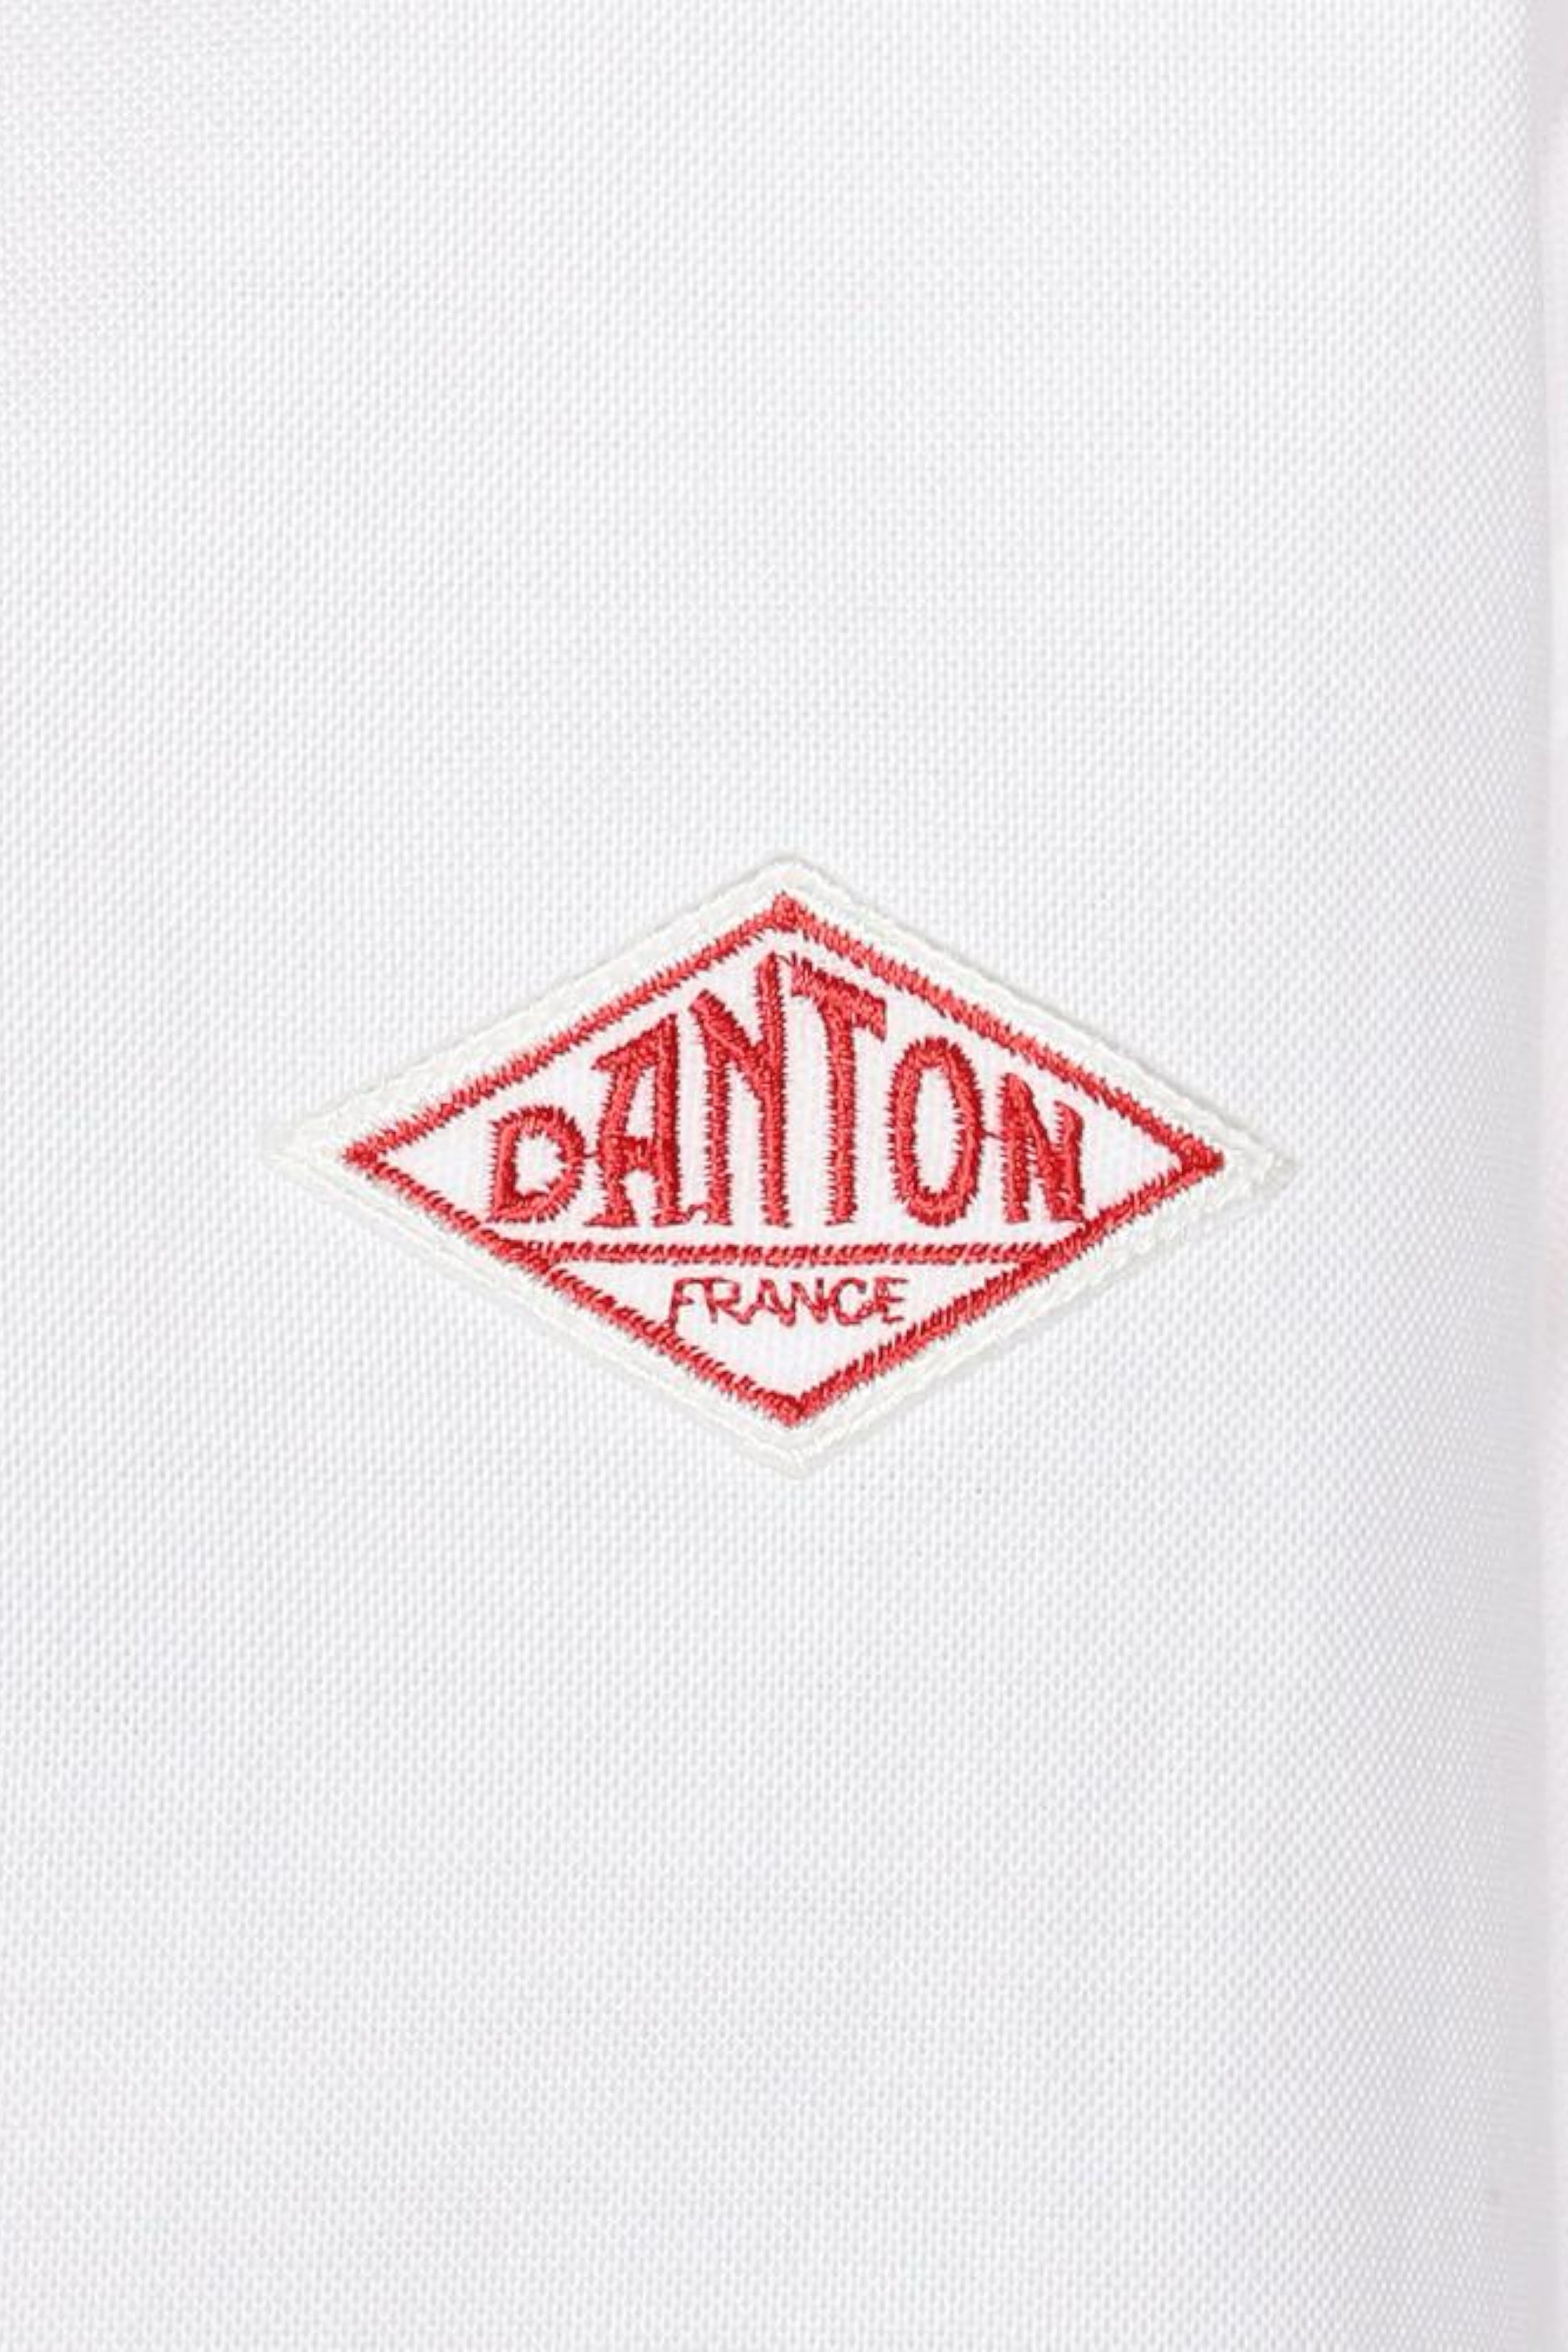 Danton - Oxford Round Collar Pullover Shirt Plain (Blue)